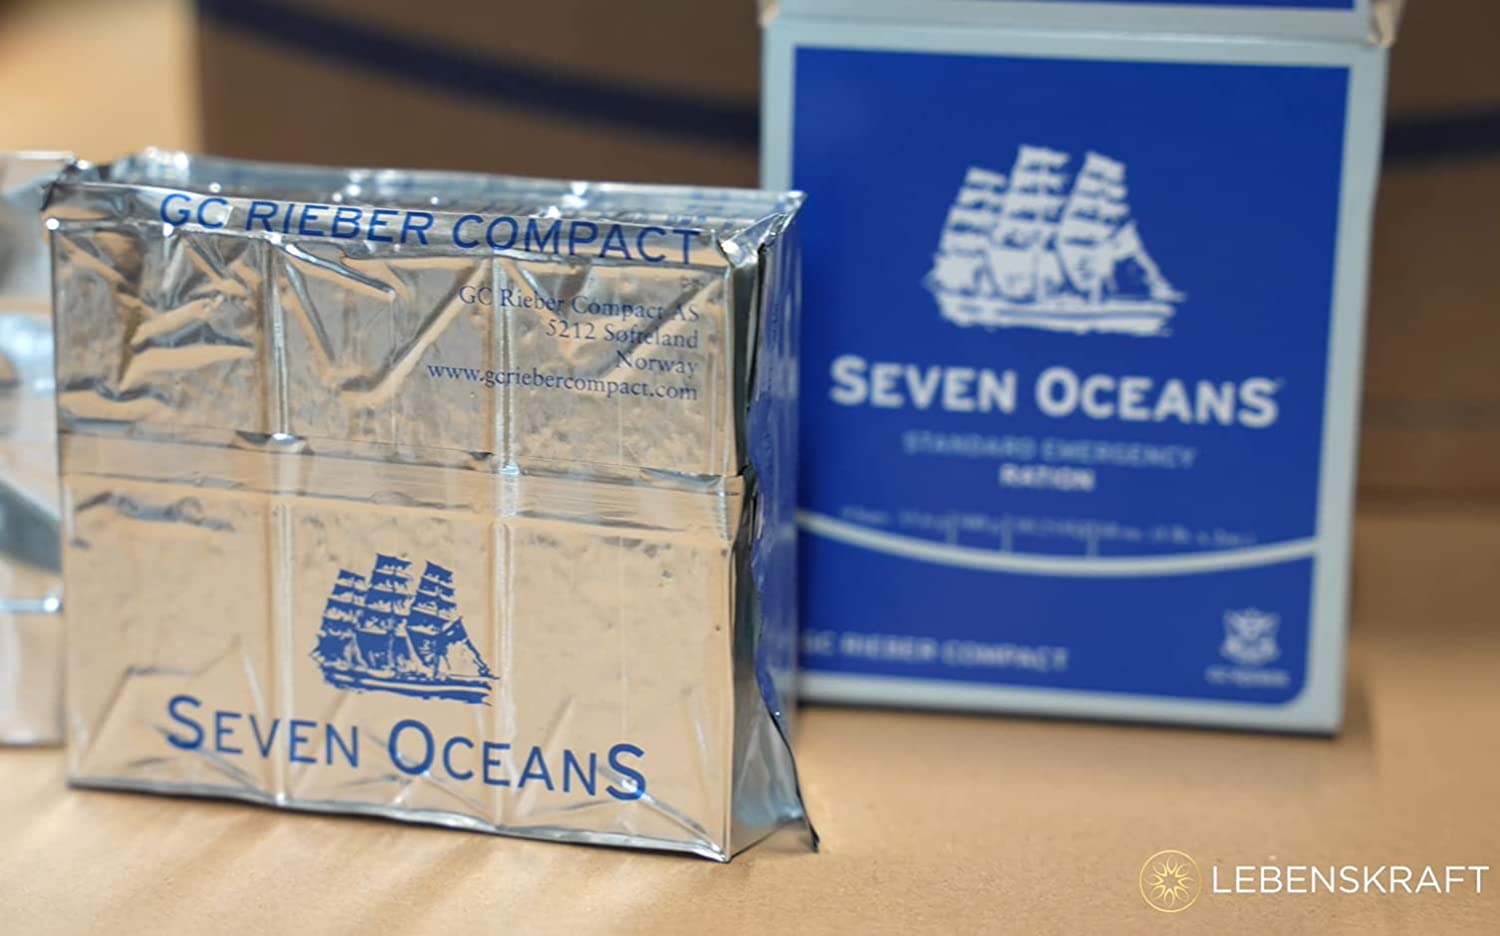 Seven Oceans 10 Tagesration Emergency Food & Trinkwasser